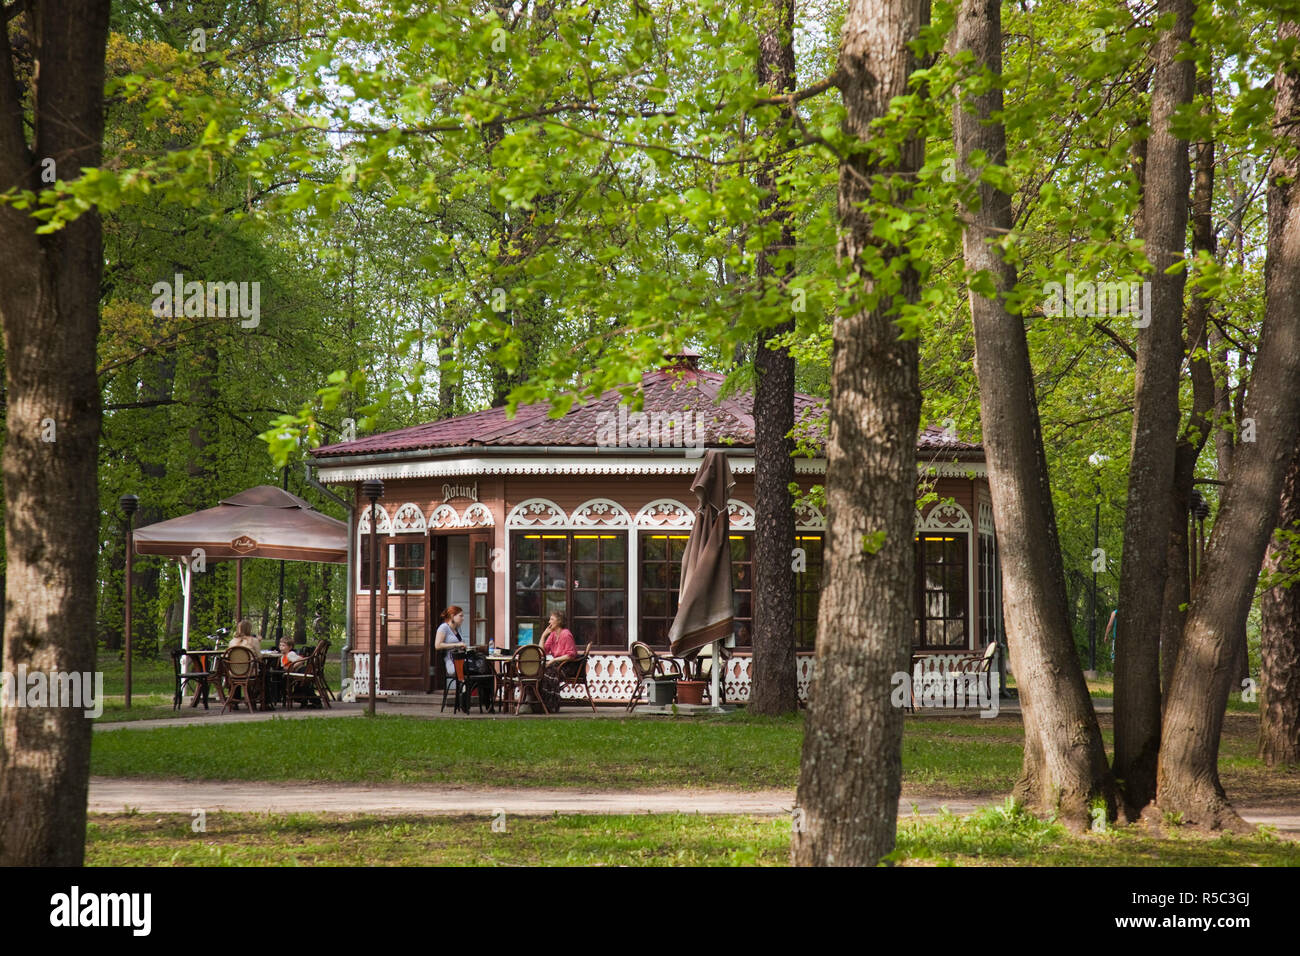 Small park cafe -Fotos und -Bildmaterial in hoher Auflösung – Alamy